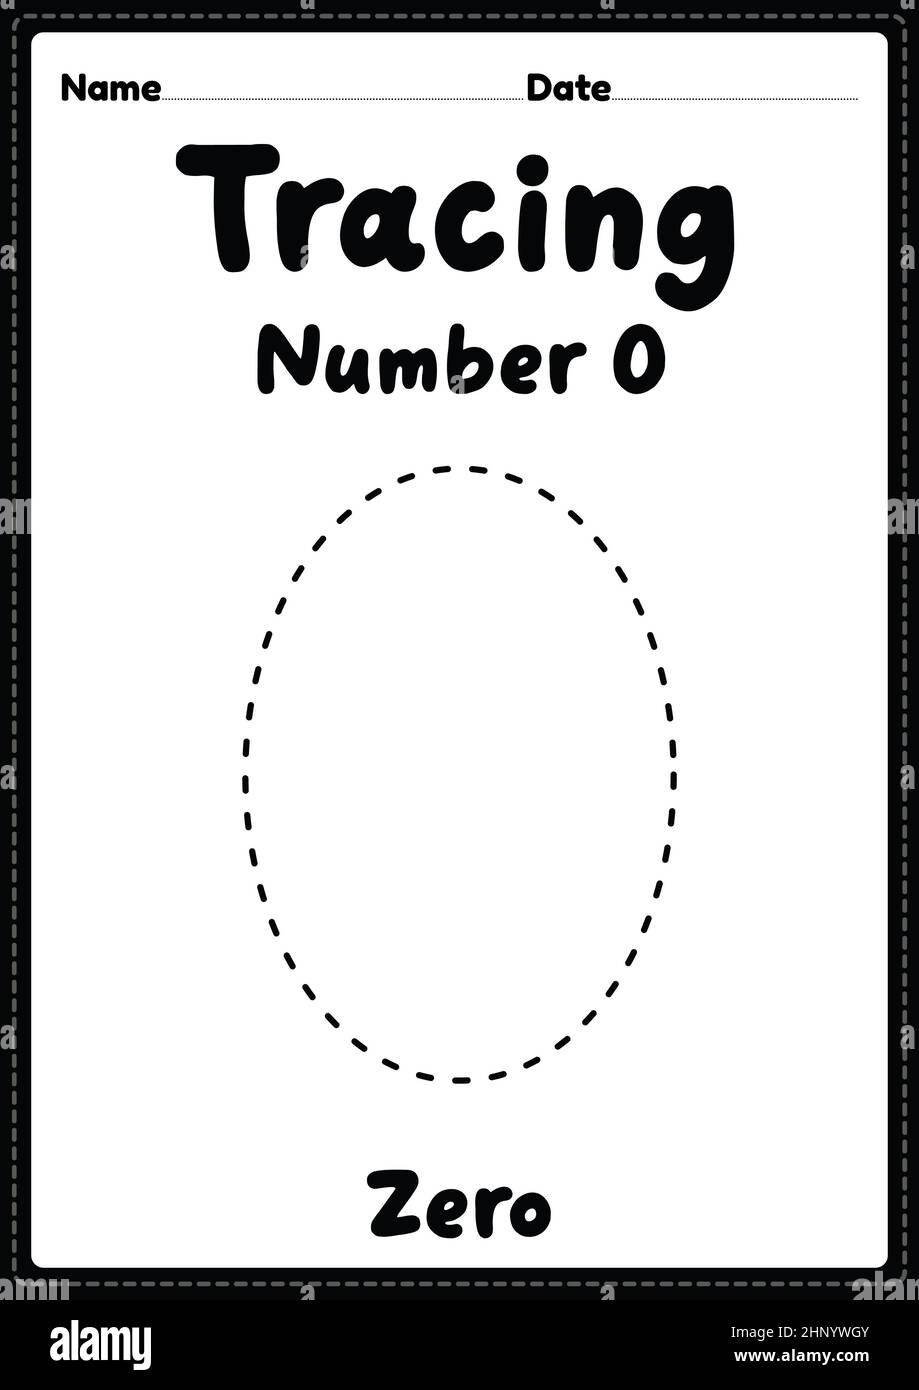 Tracing number 0 worksheet for kindergarten, preschool and Montessori kids for handwriting practice activities in a printable page. Stock Photo